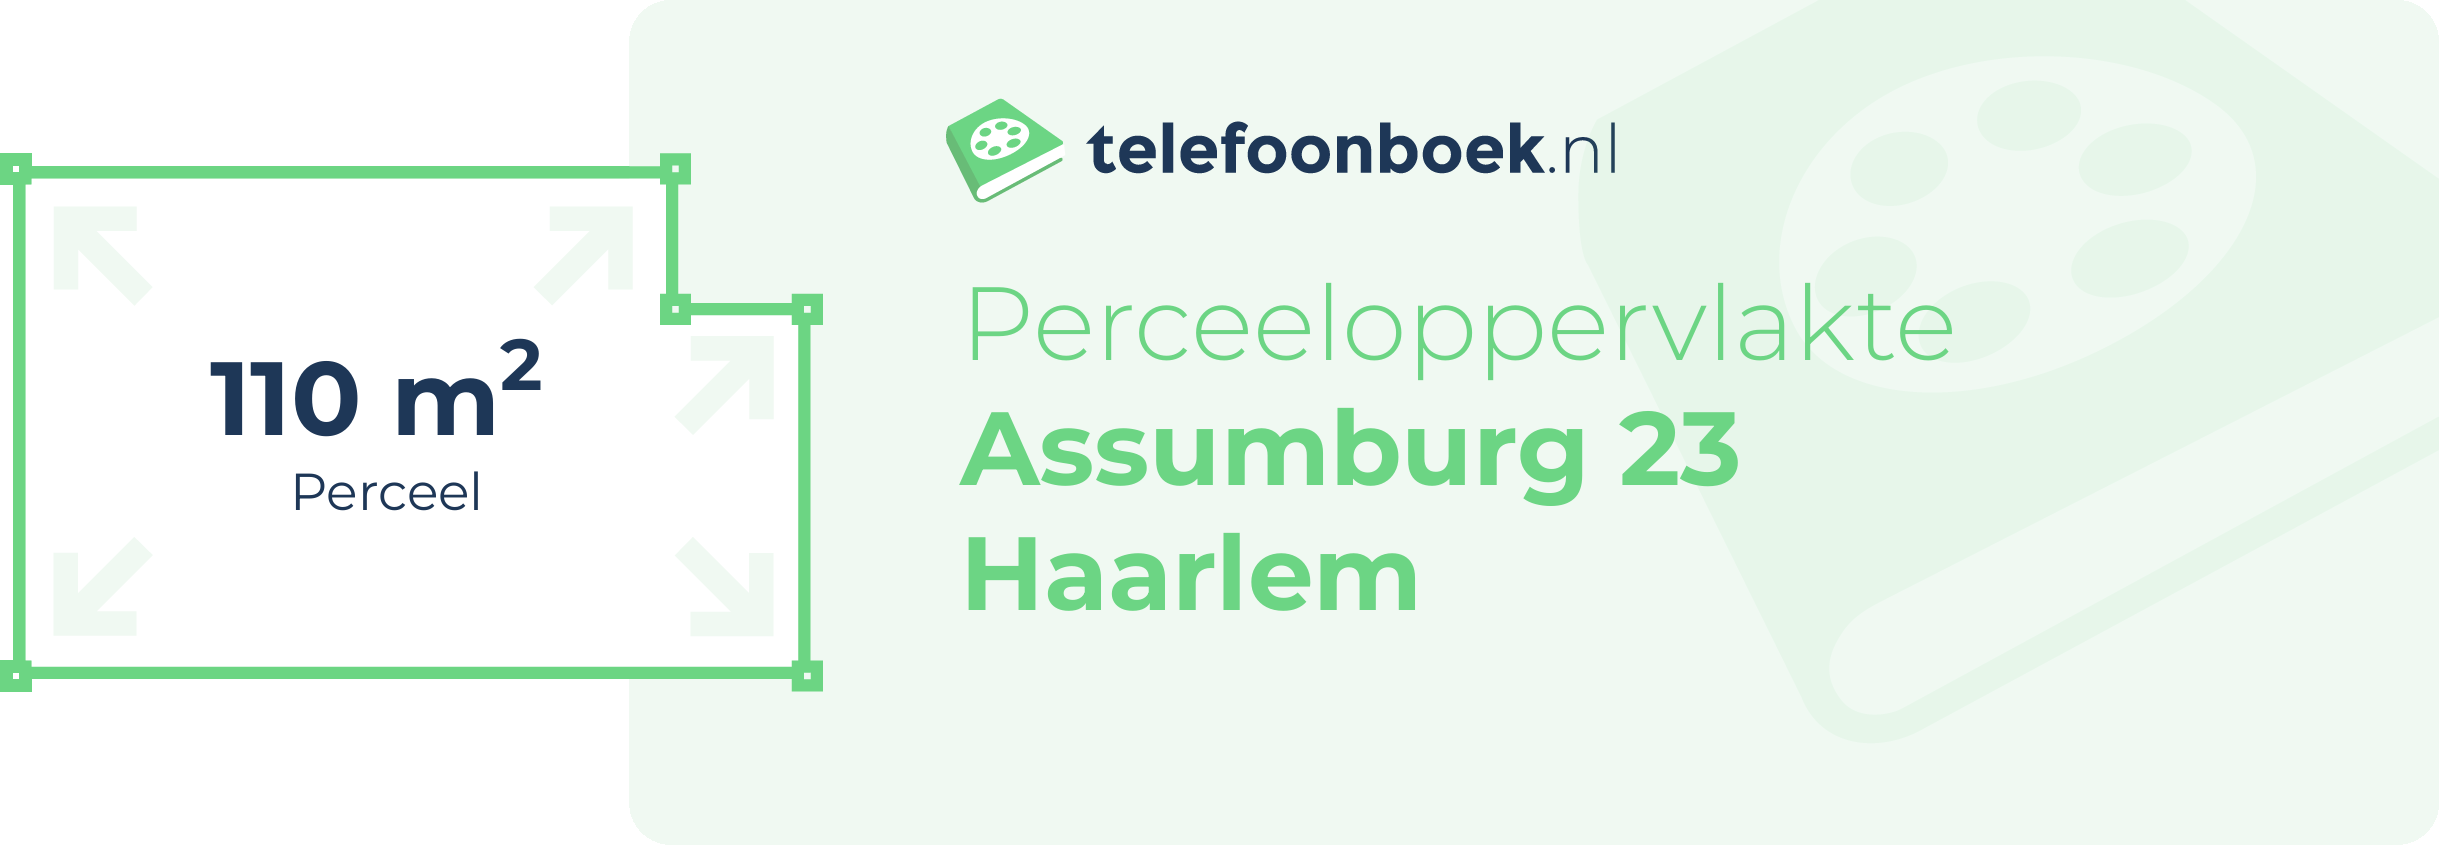 Perceeloppervlakte Assumburg 23 Haarlem